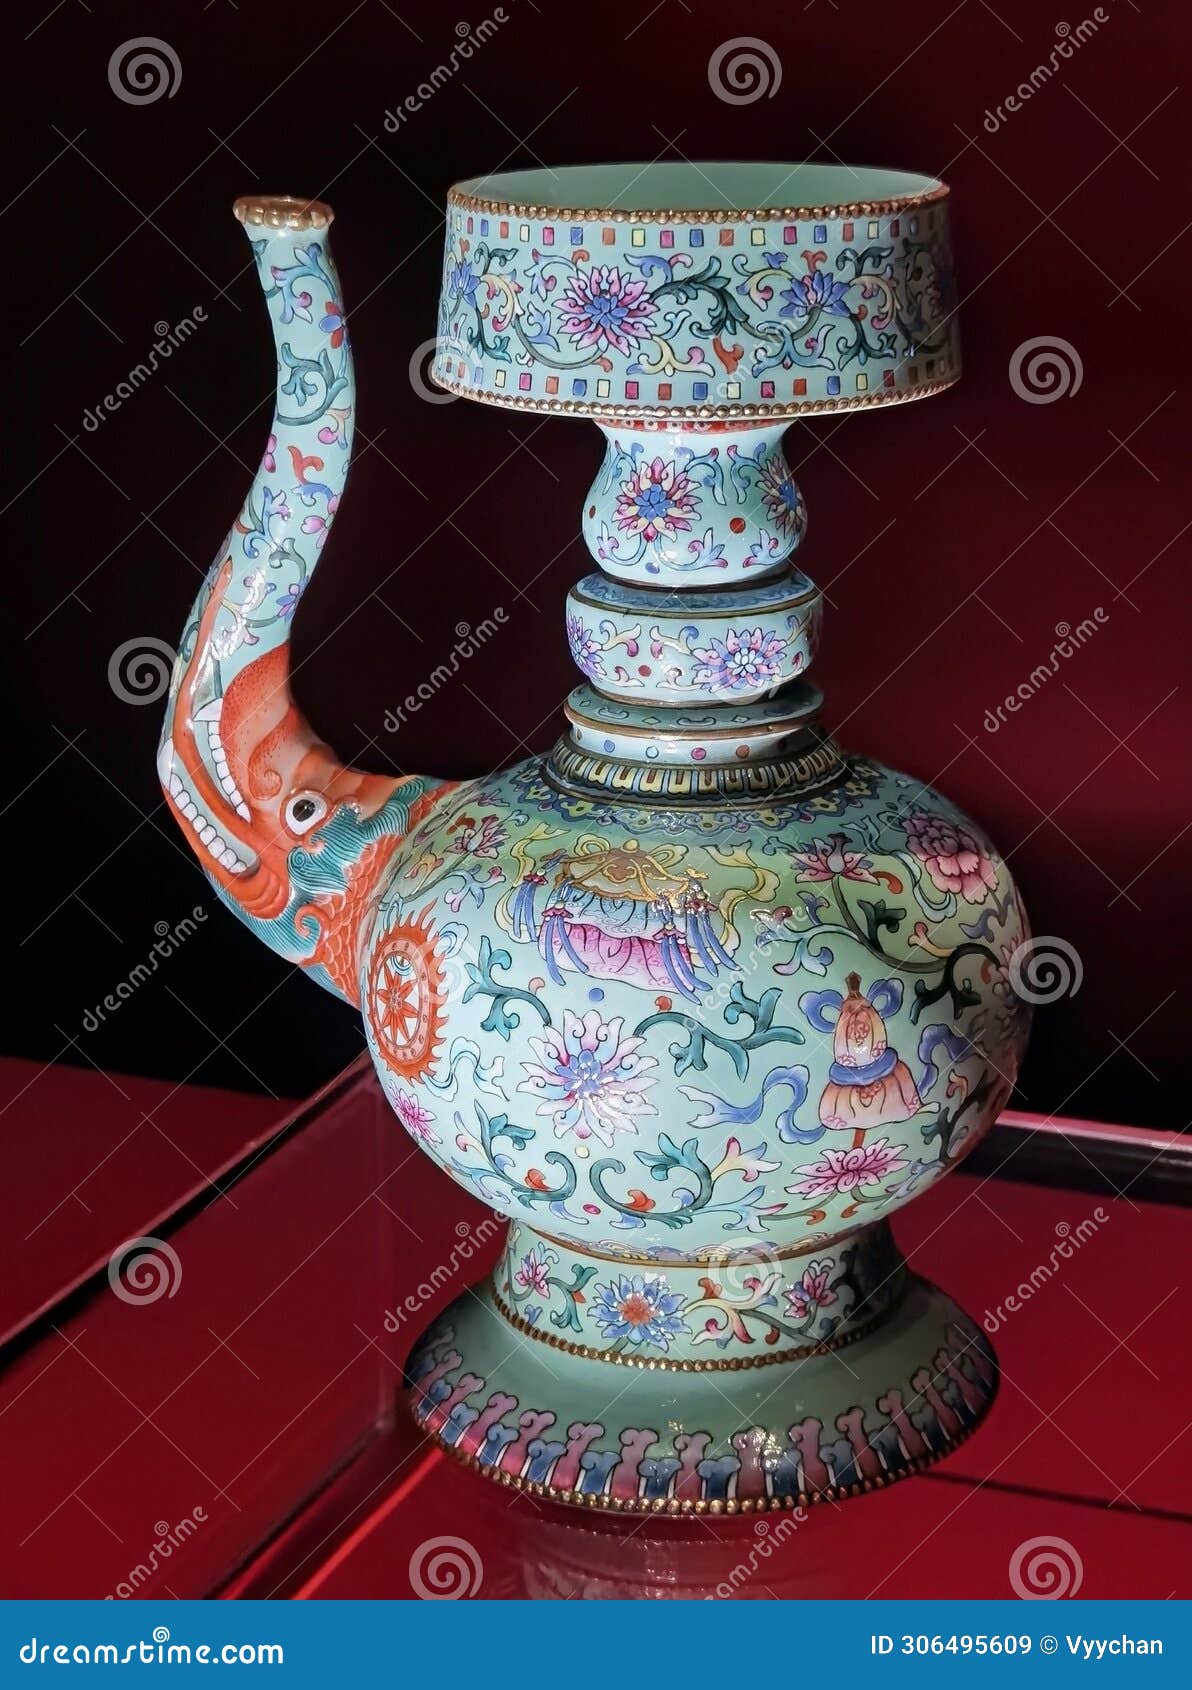 antique qing dynasty jiaqing reign green glass vase vaso de vidro verde em forma de casco de cavalo tashi lhumpo monastery